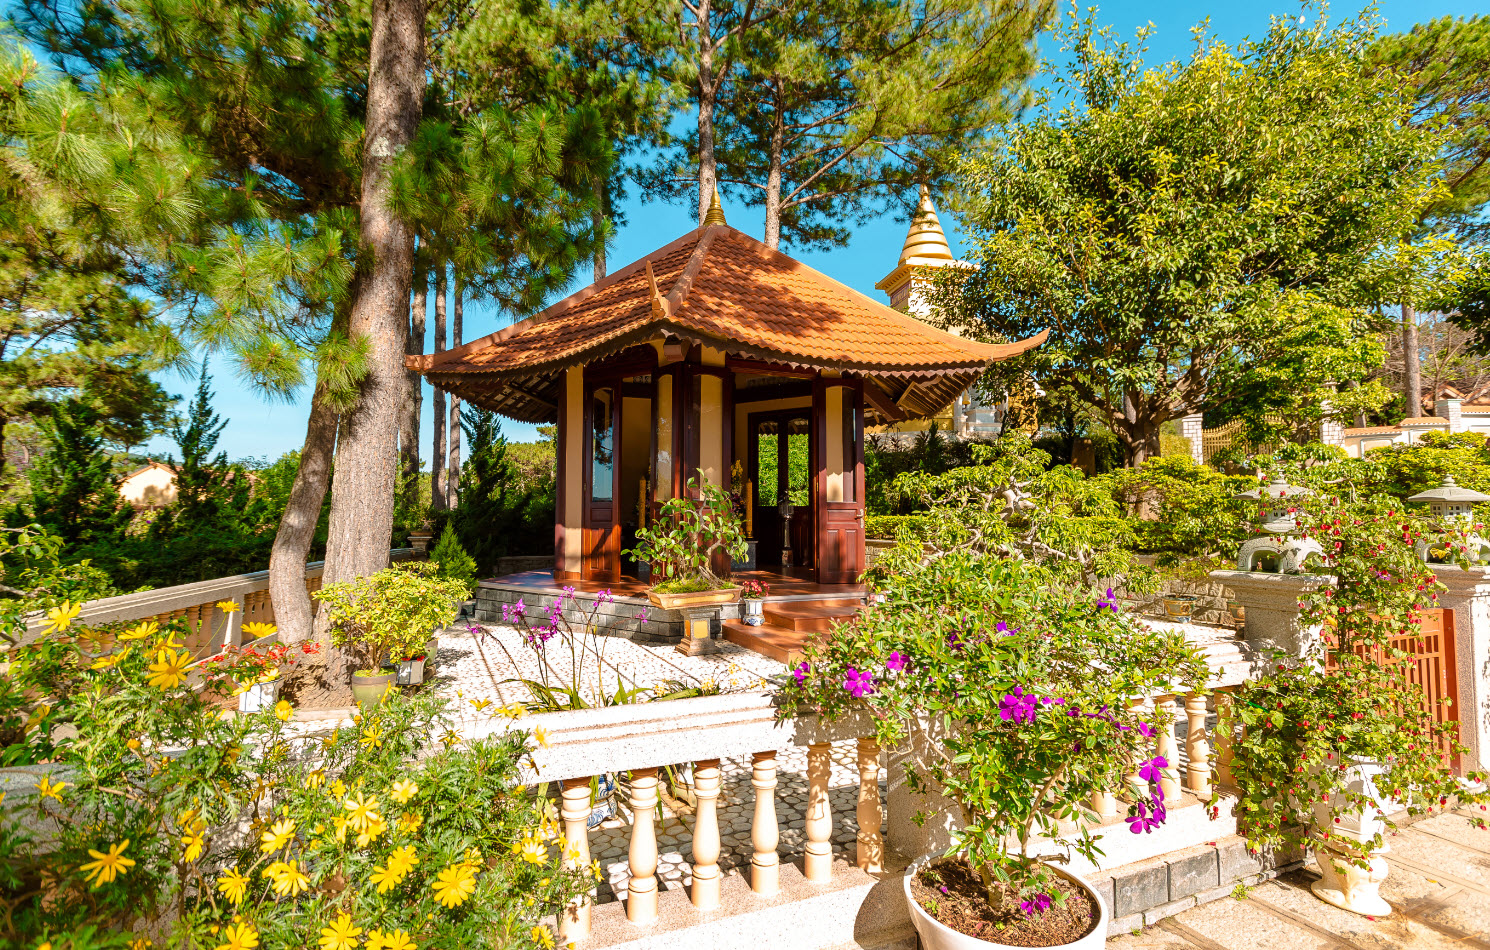 Linh Phuoc pagoda park